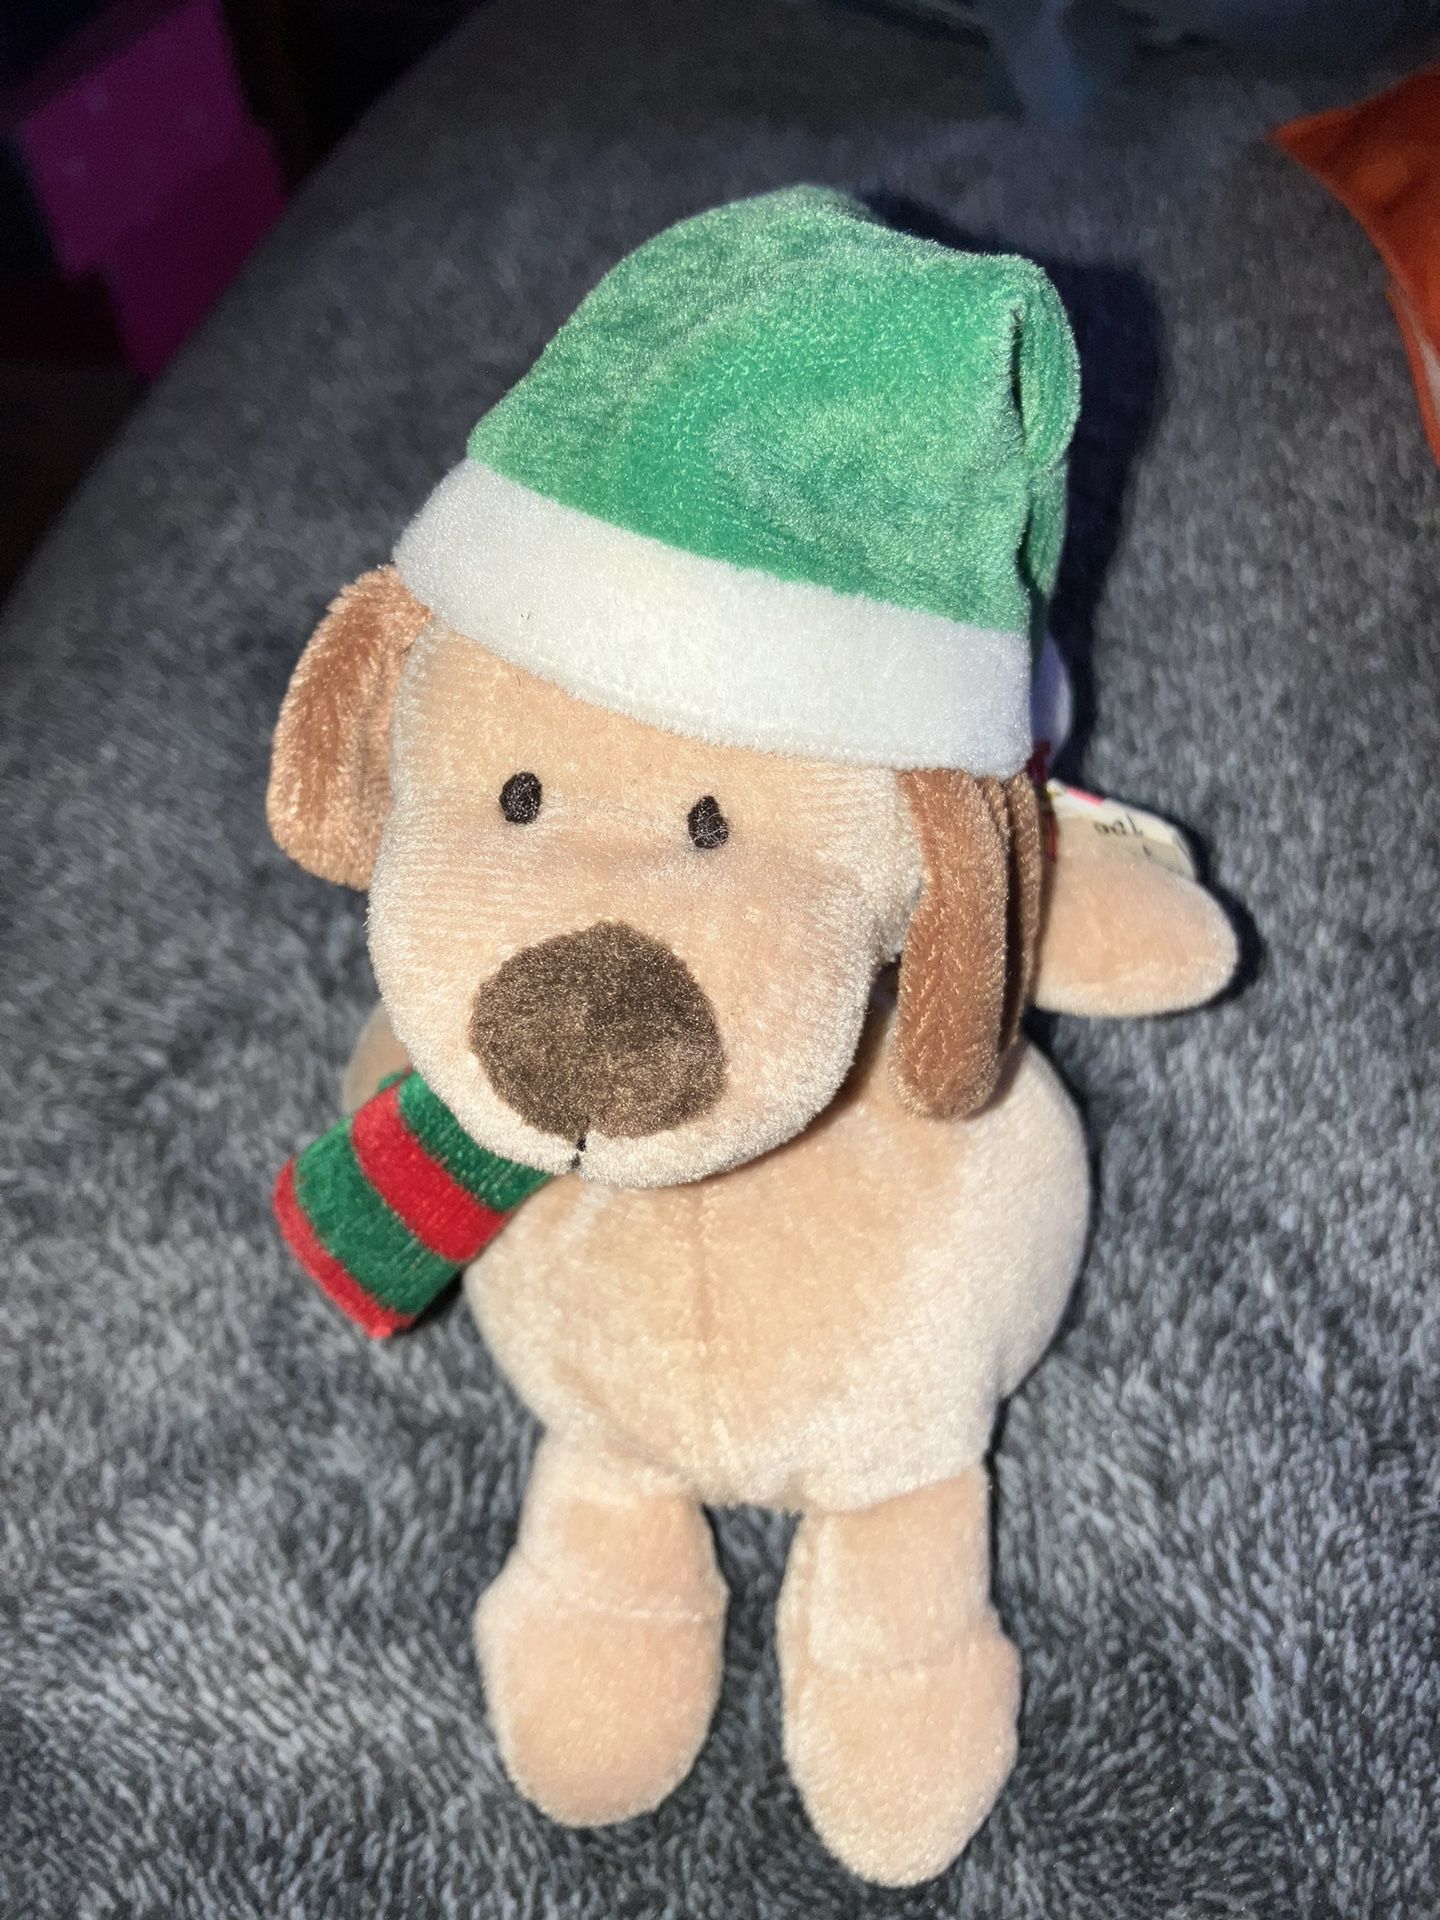 Ty Jingle Beanie Ornament “Slushes” the Holiday Dog - No Hang Tag